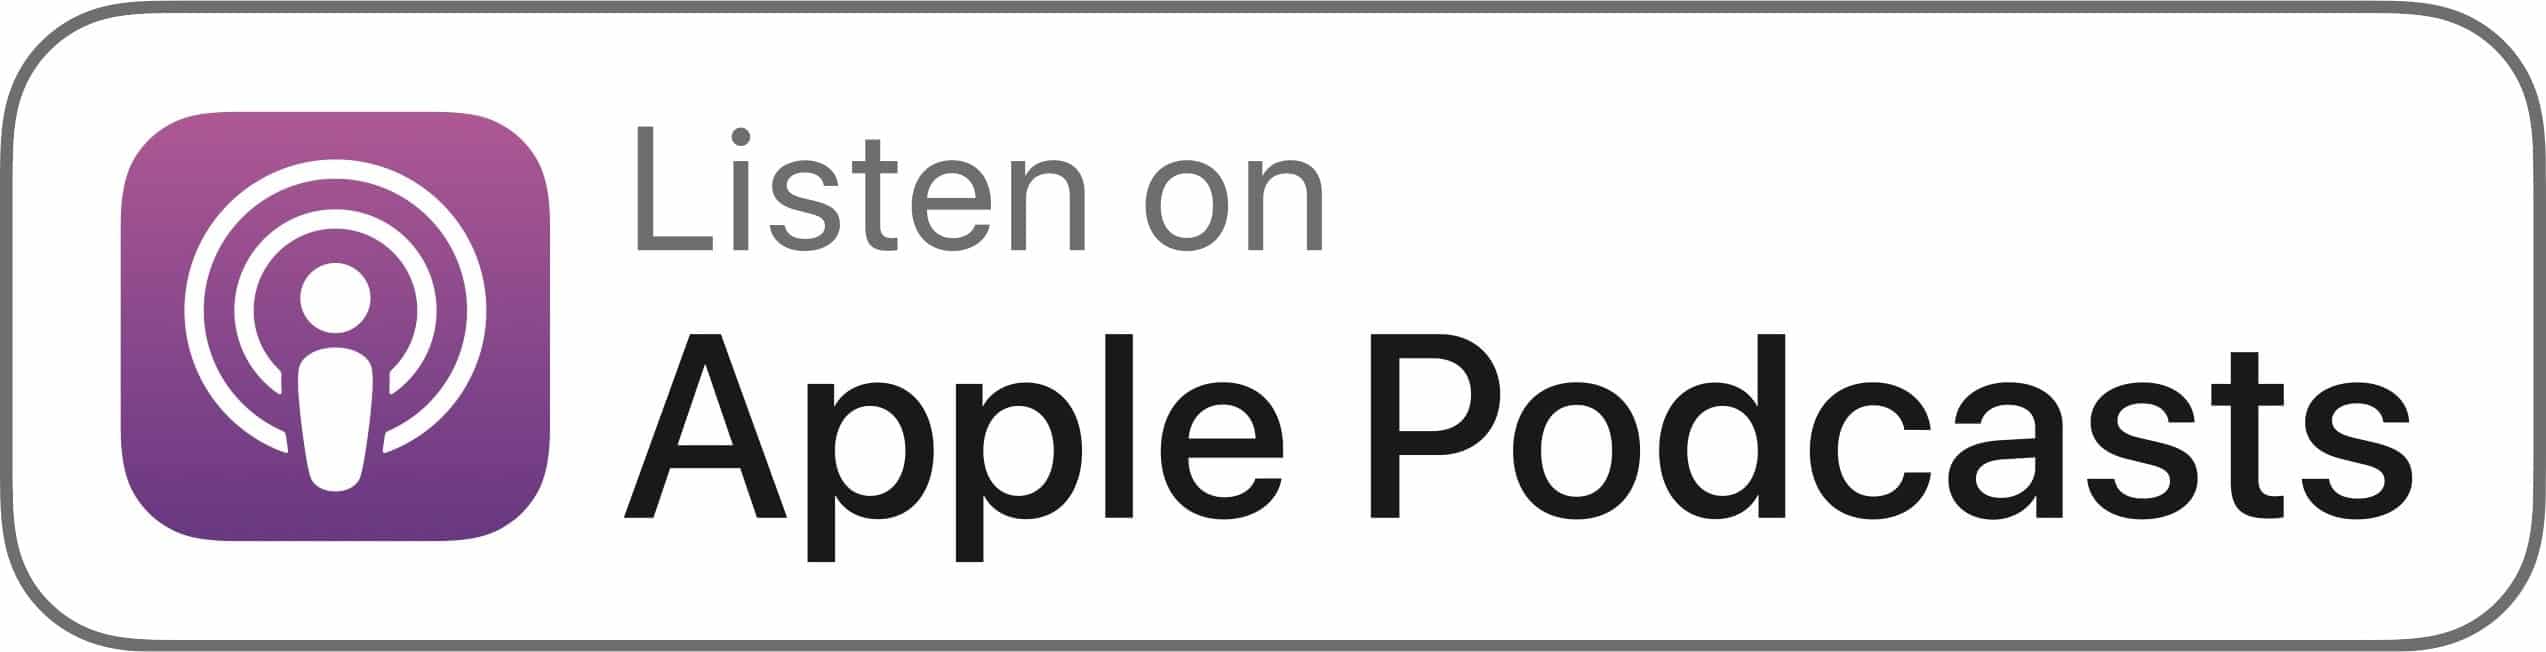 Apple Podcasts Logo - casper funeral & cremation service